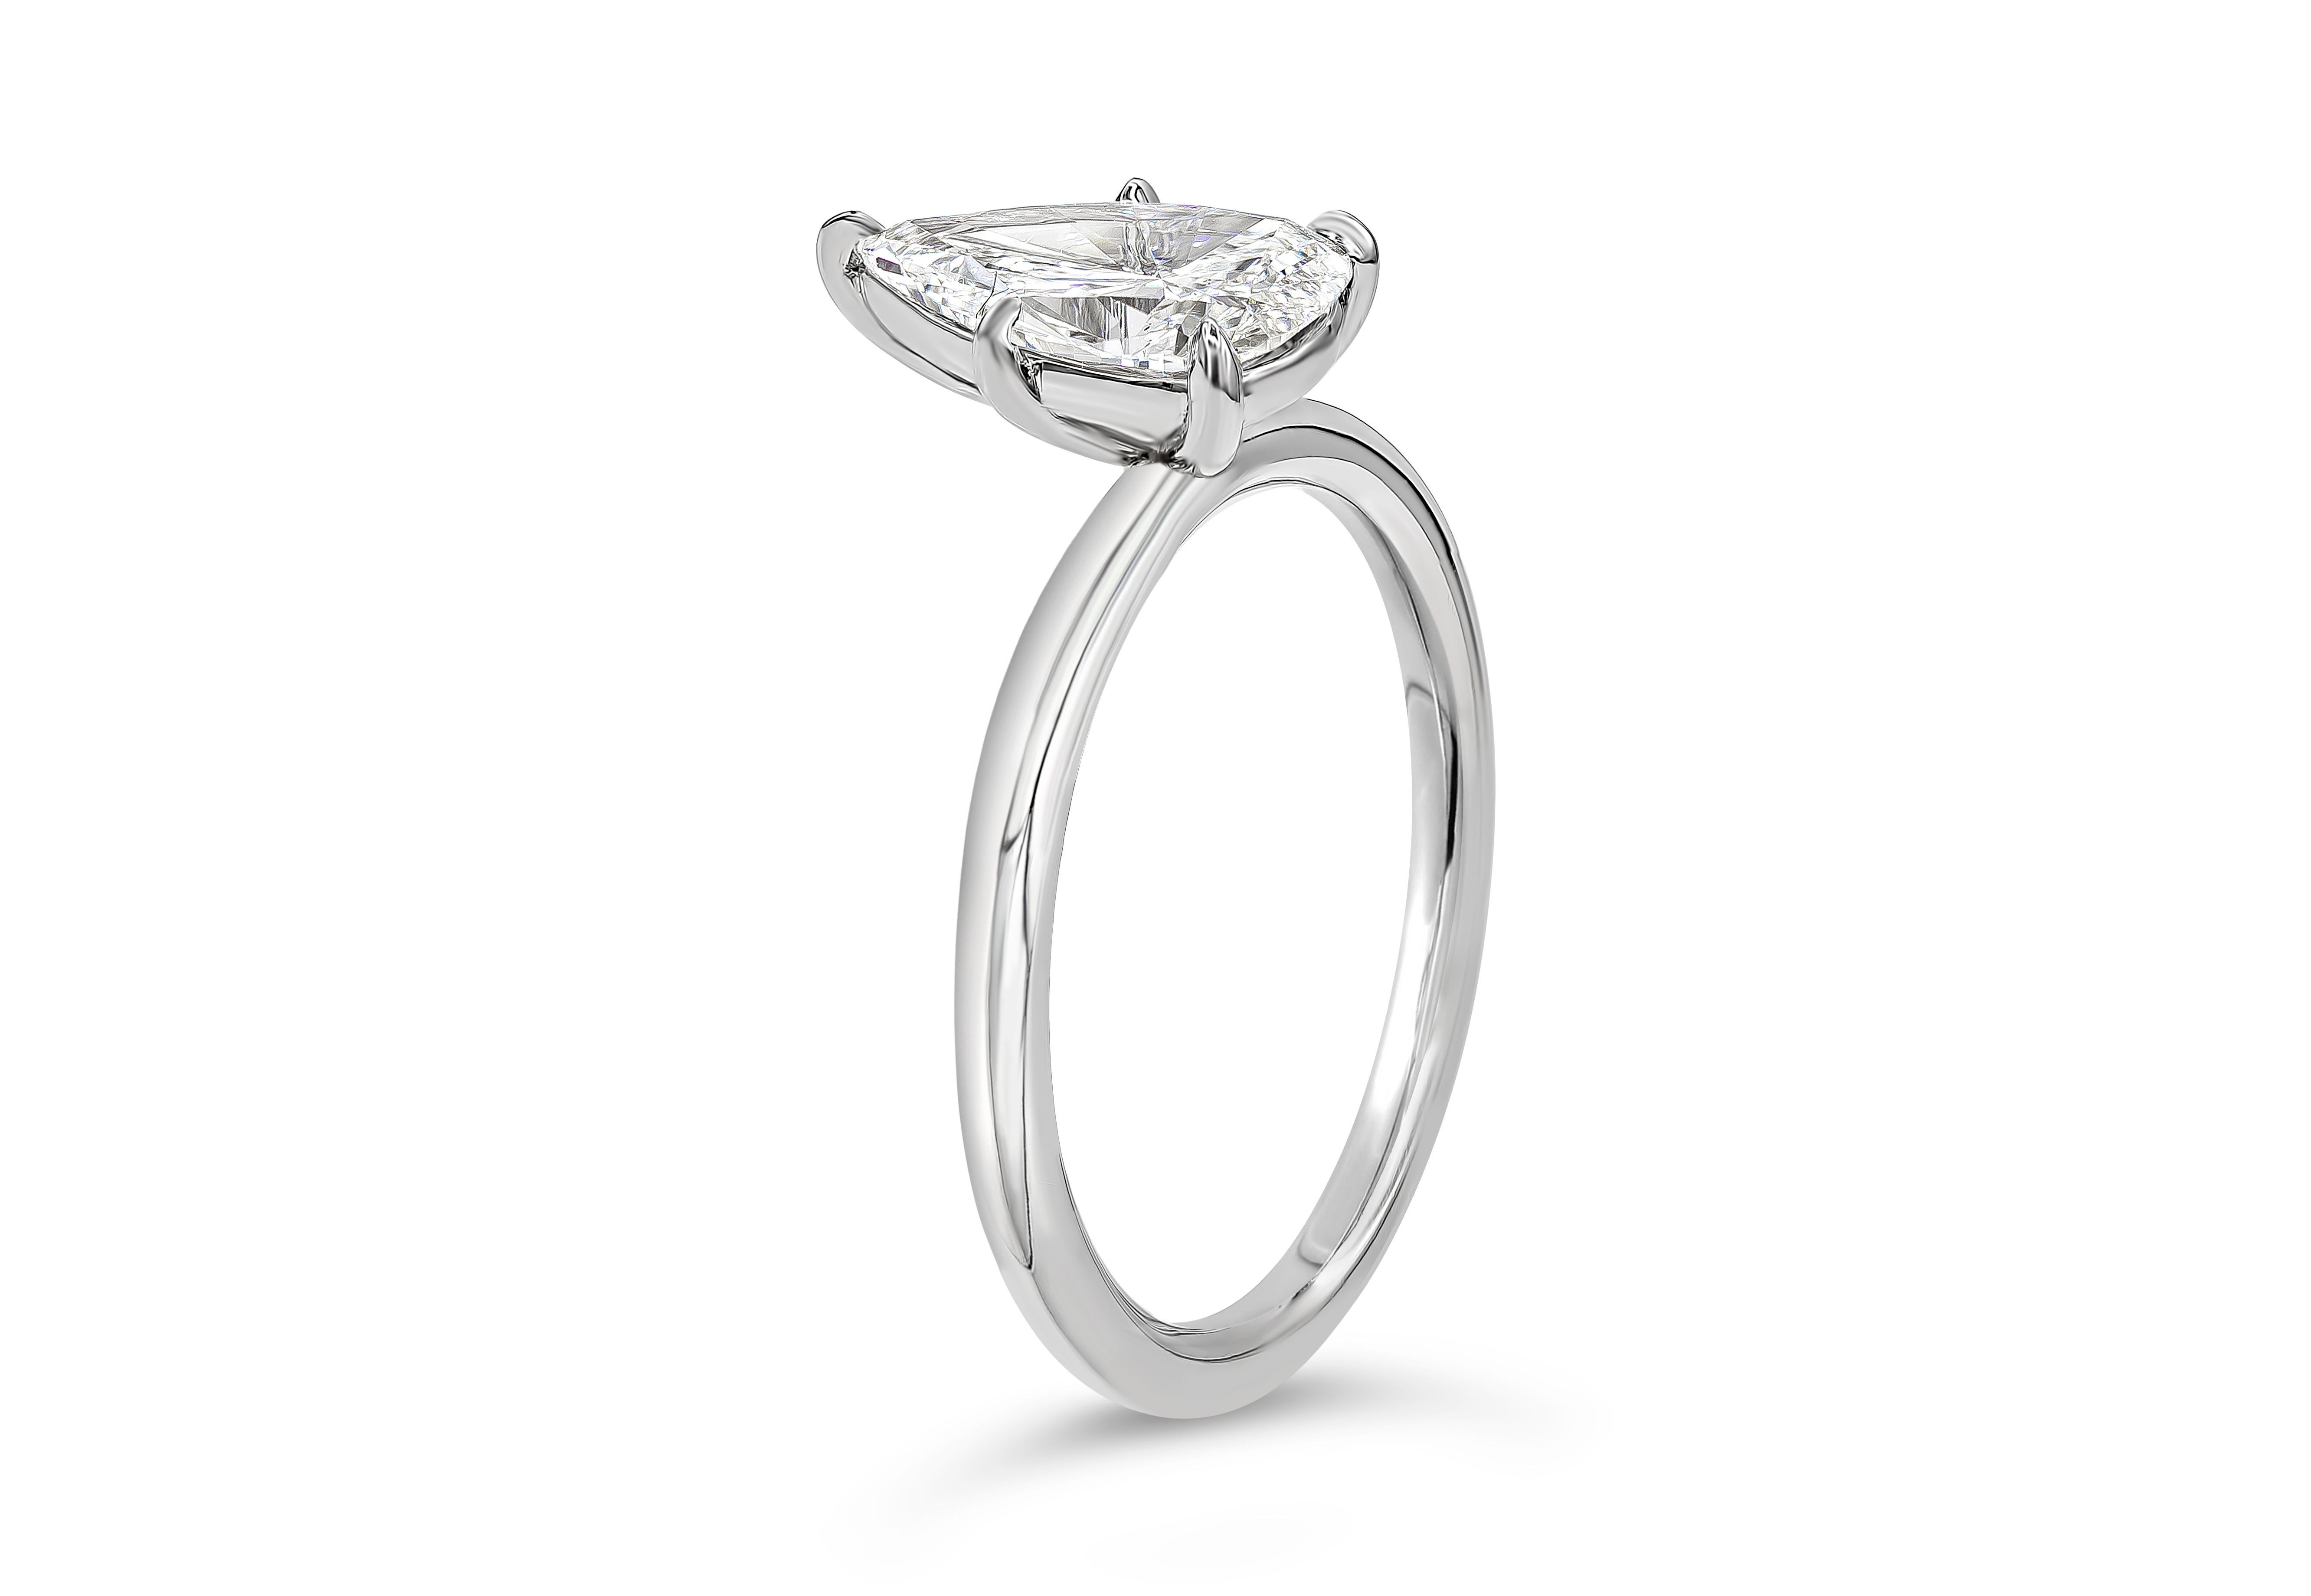 1.28 carat diamond ring